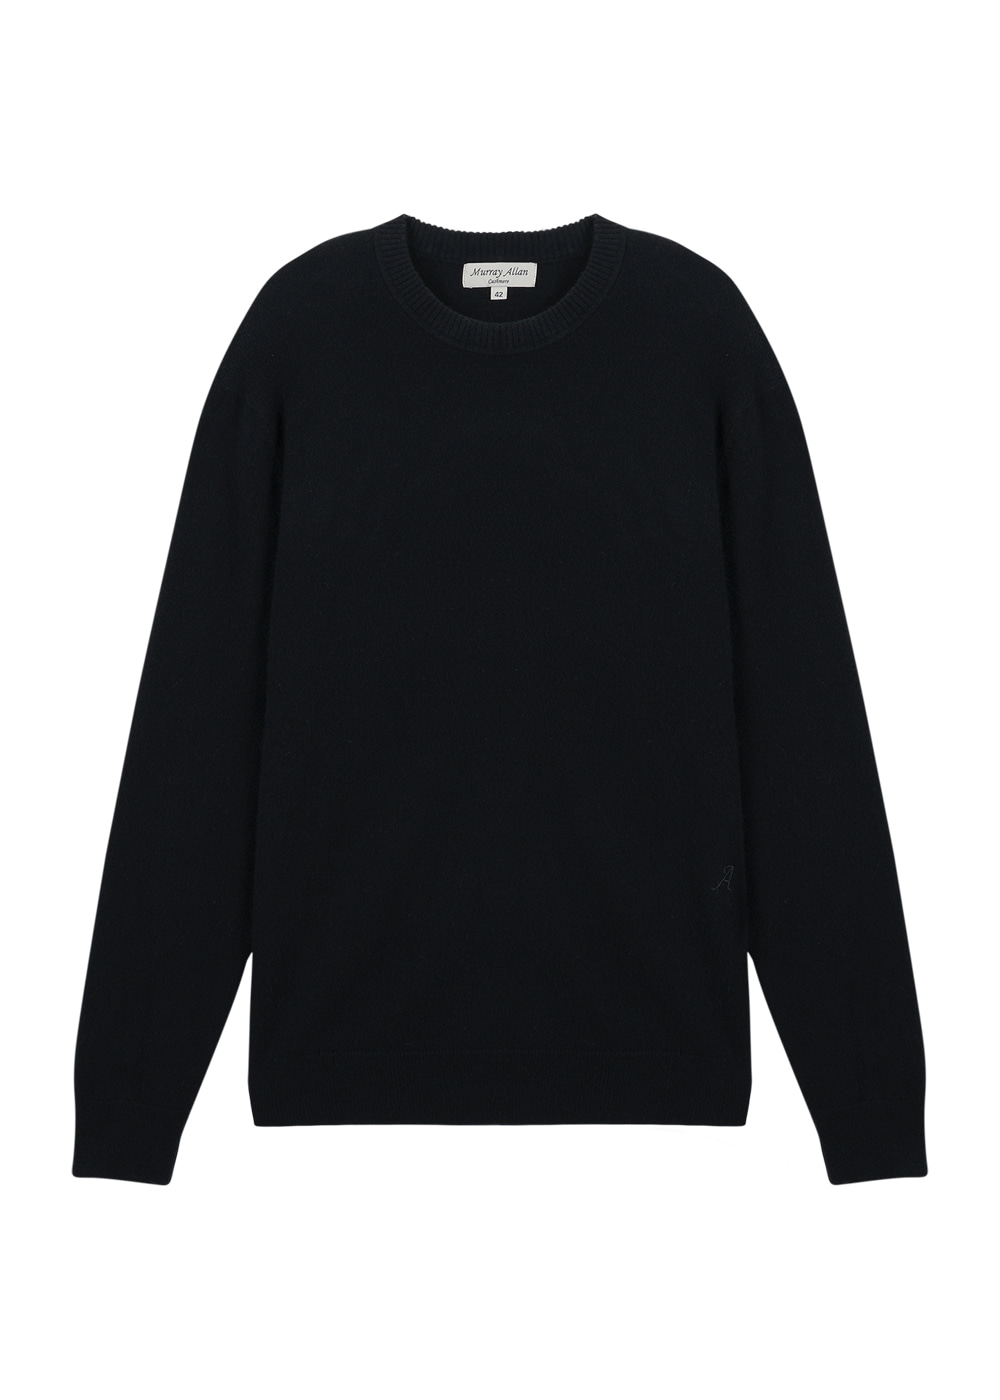 A LOGO crewneck pullover (black)  20%